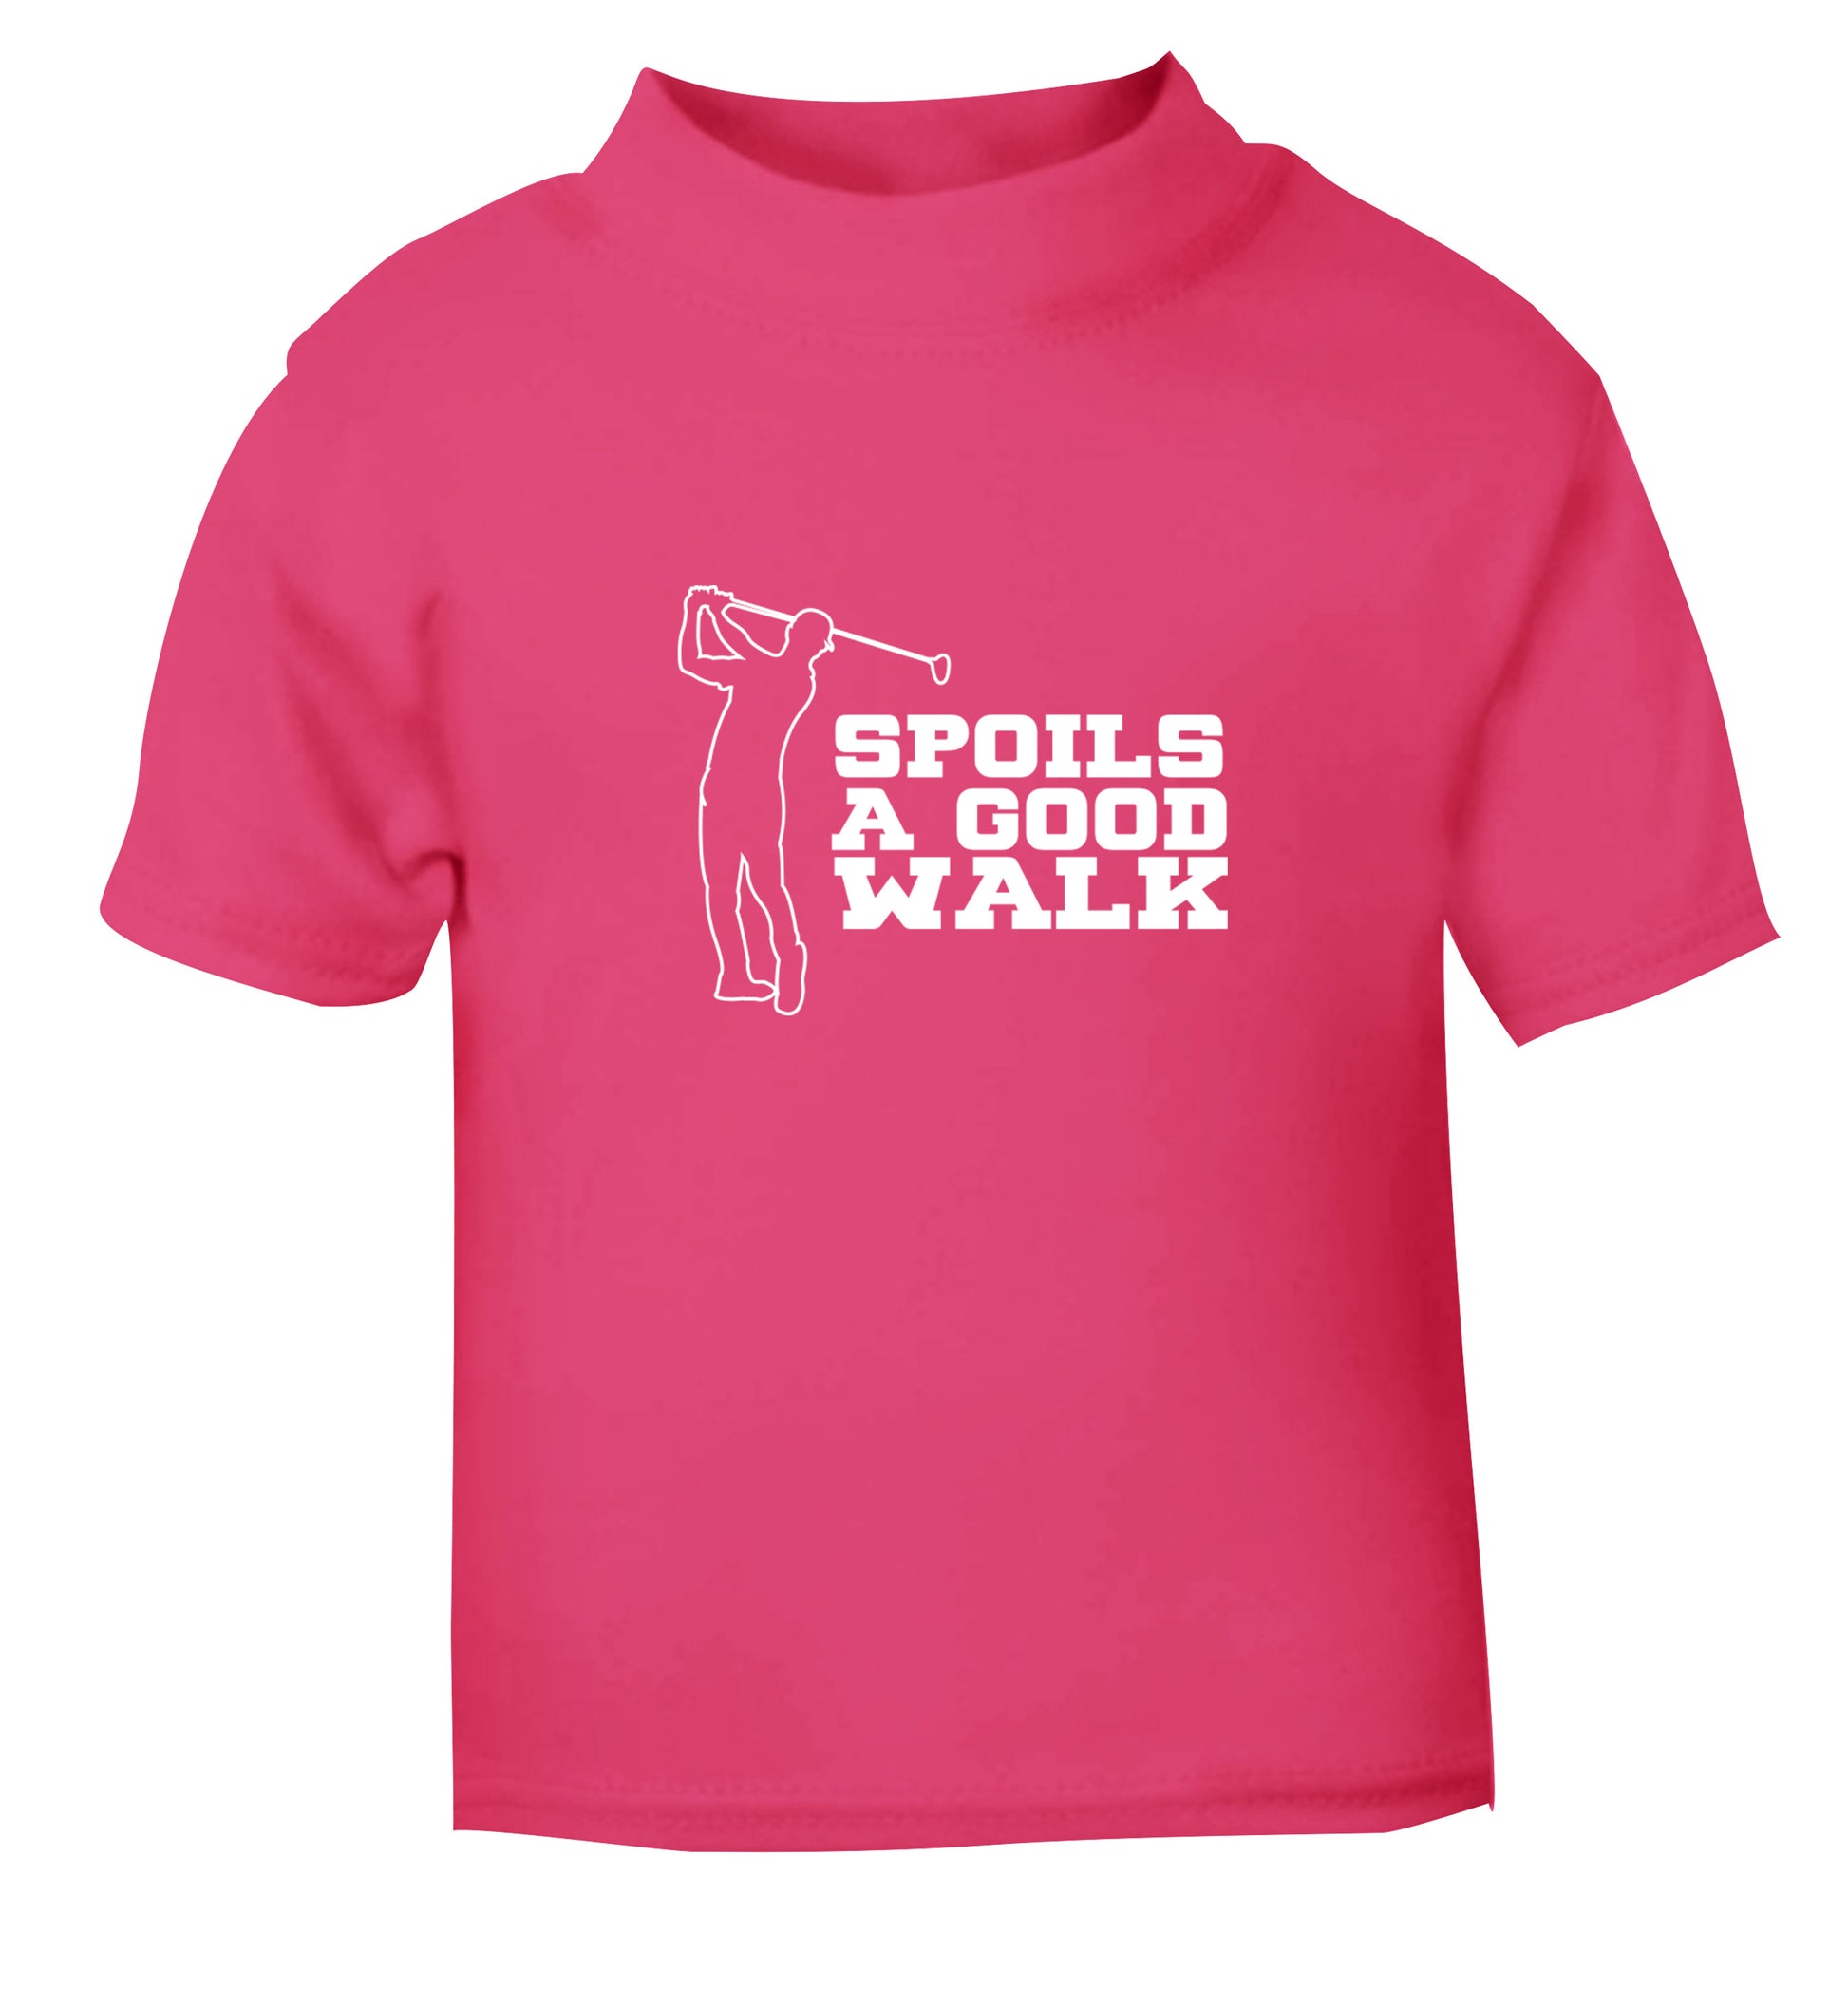 Golf spoils a good walk pink Baby Toddler Tshirt 2 Years